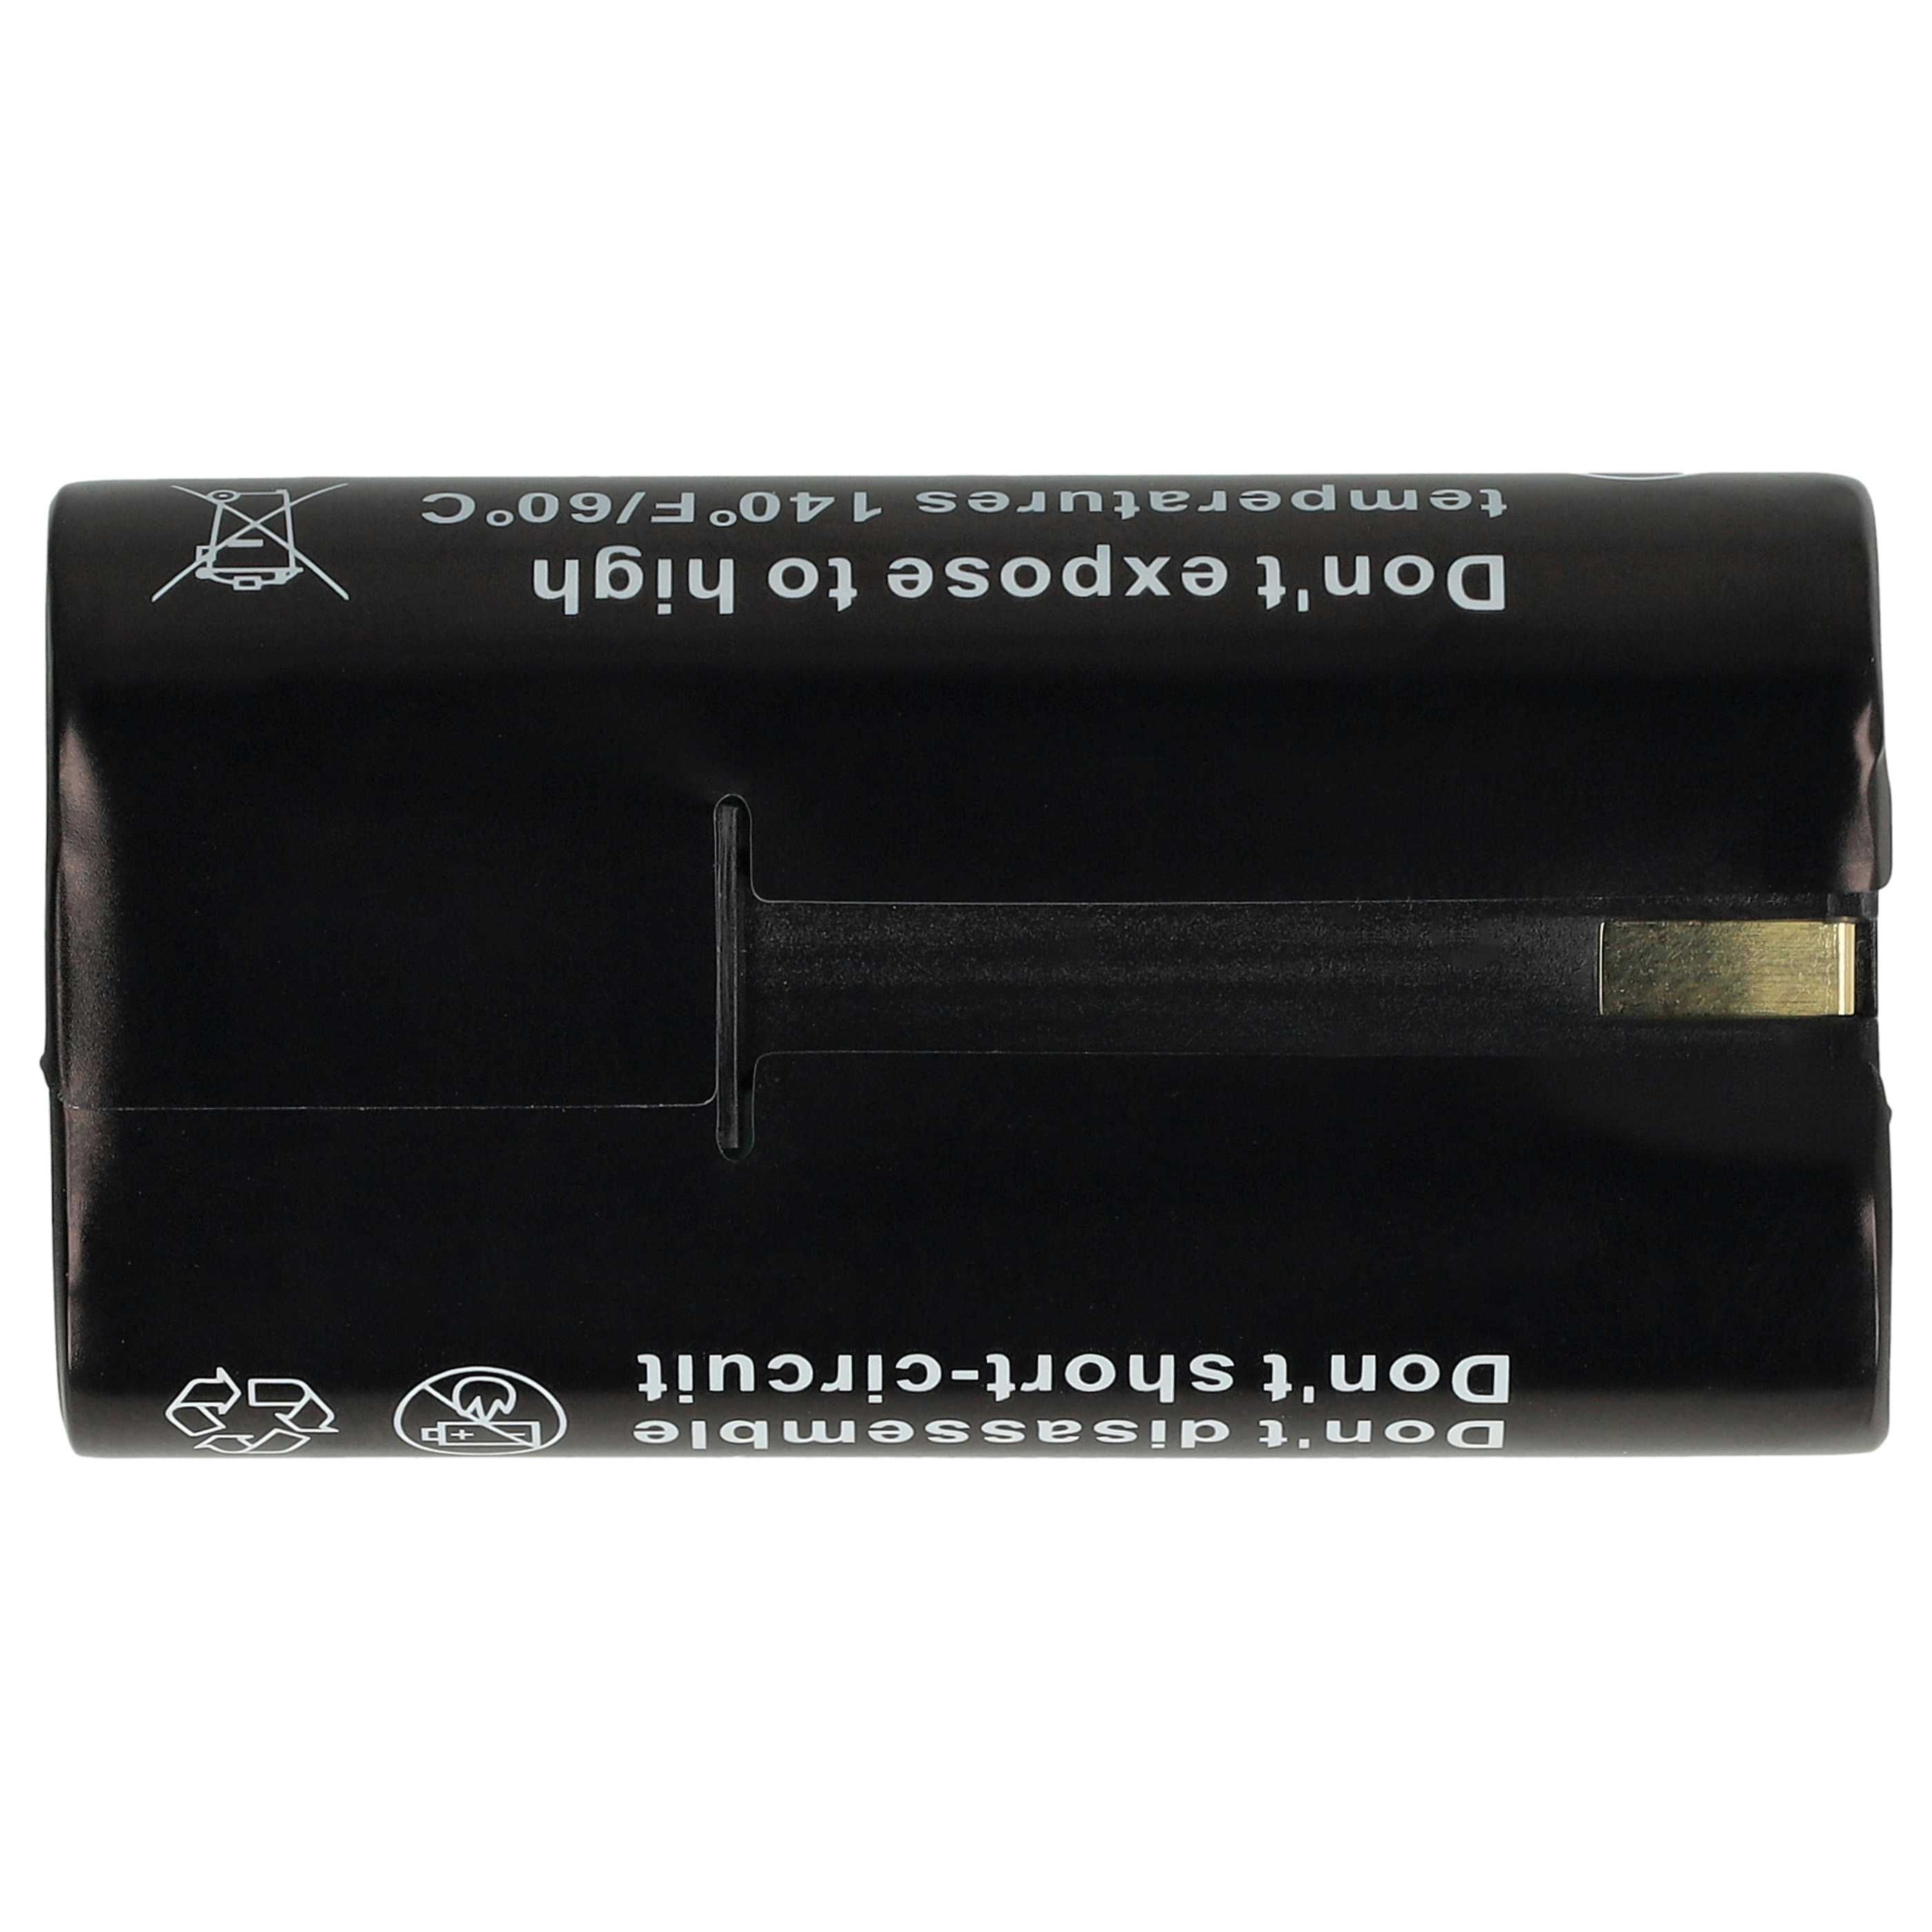 Kamera-Akku als Ersatz für Kodak Klic-8000, RB50 - 1520mAh 3,6V Li-Ion